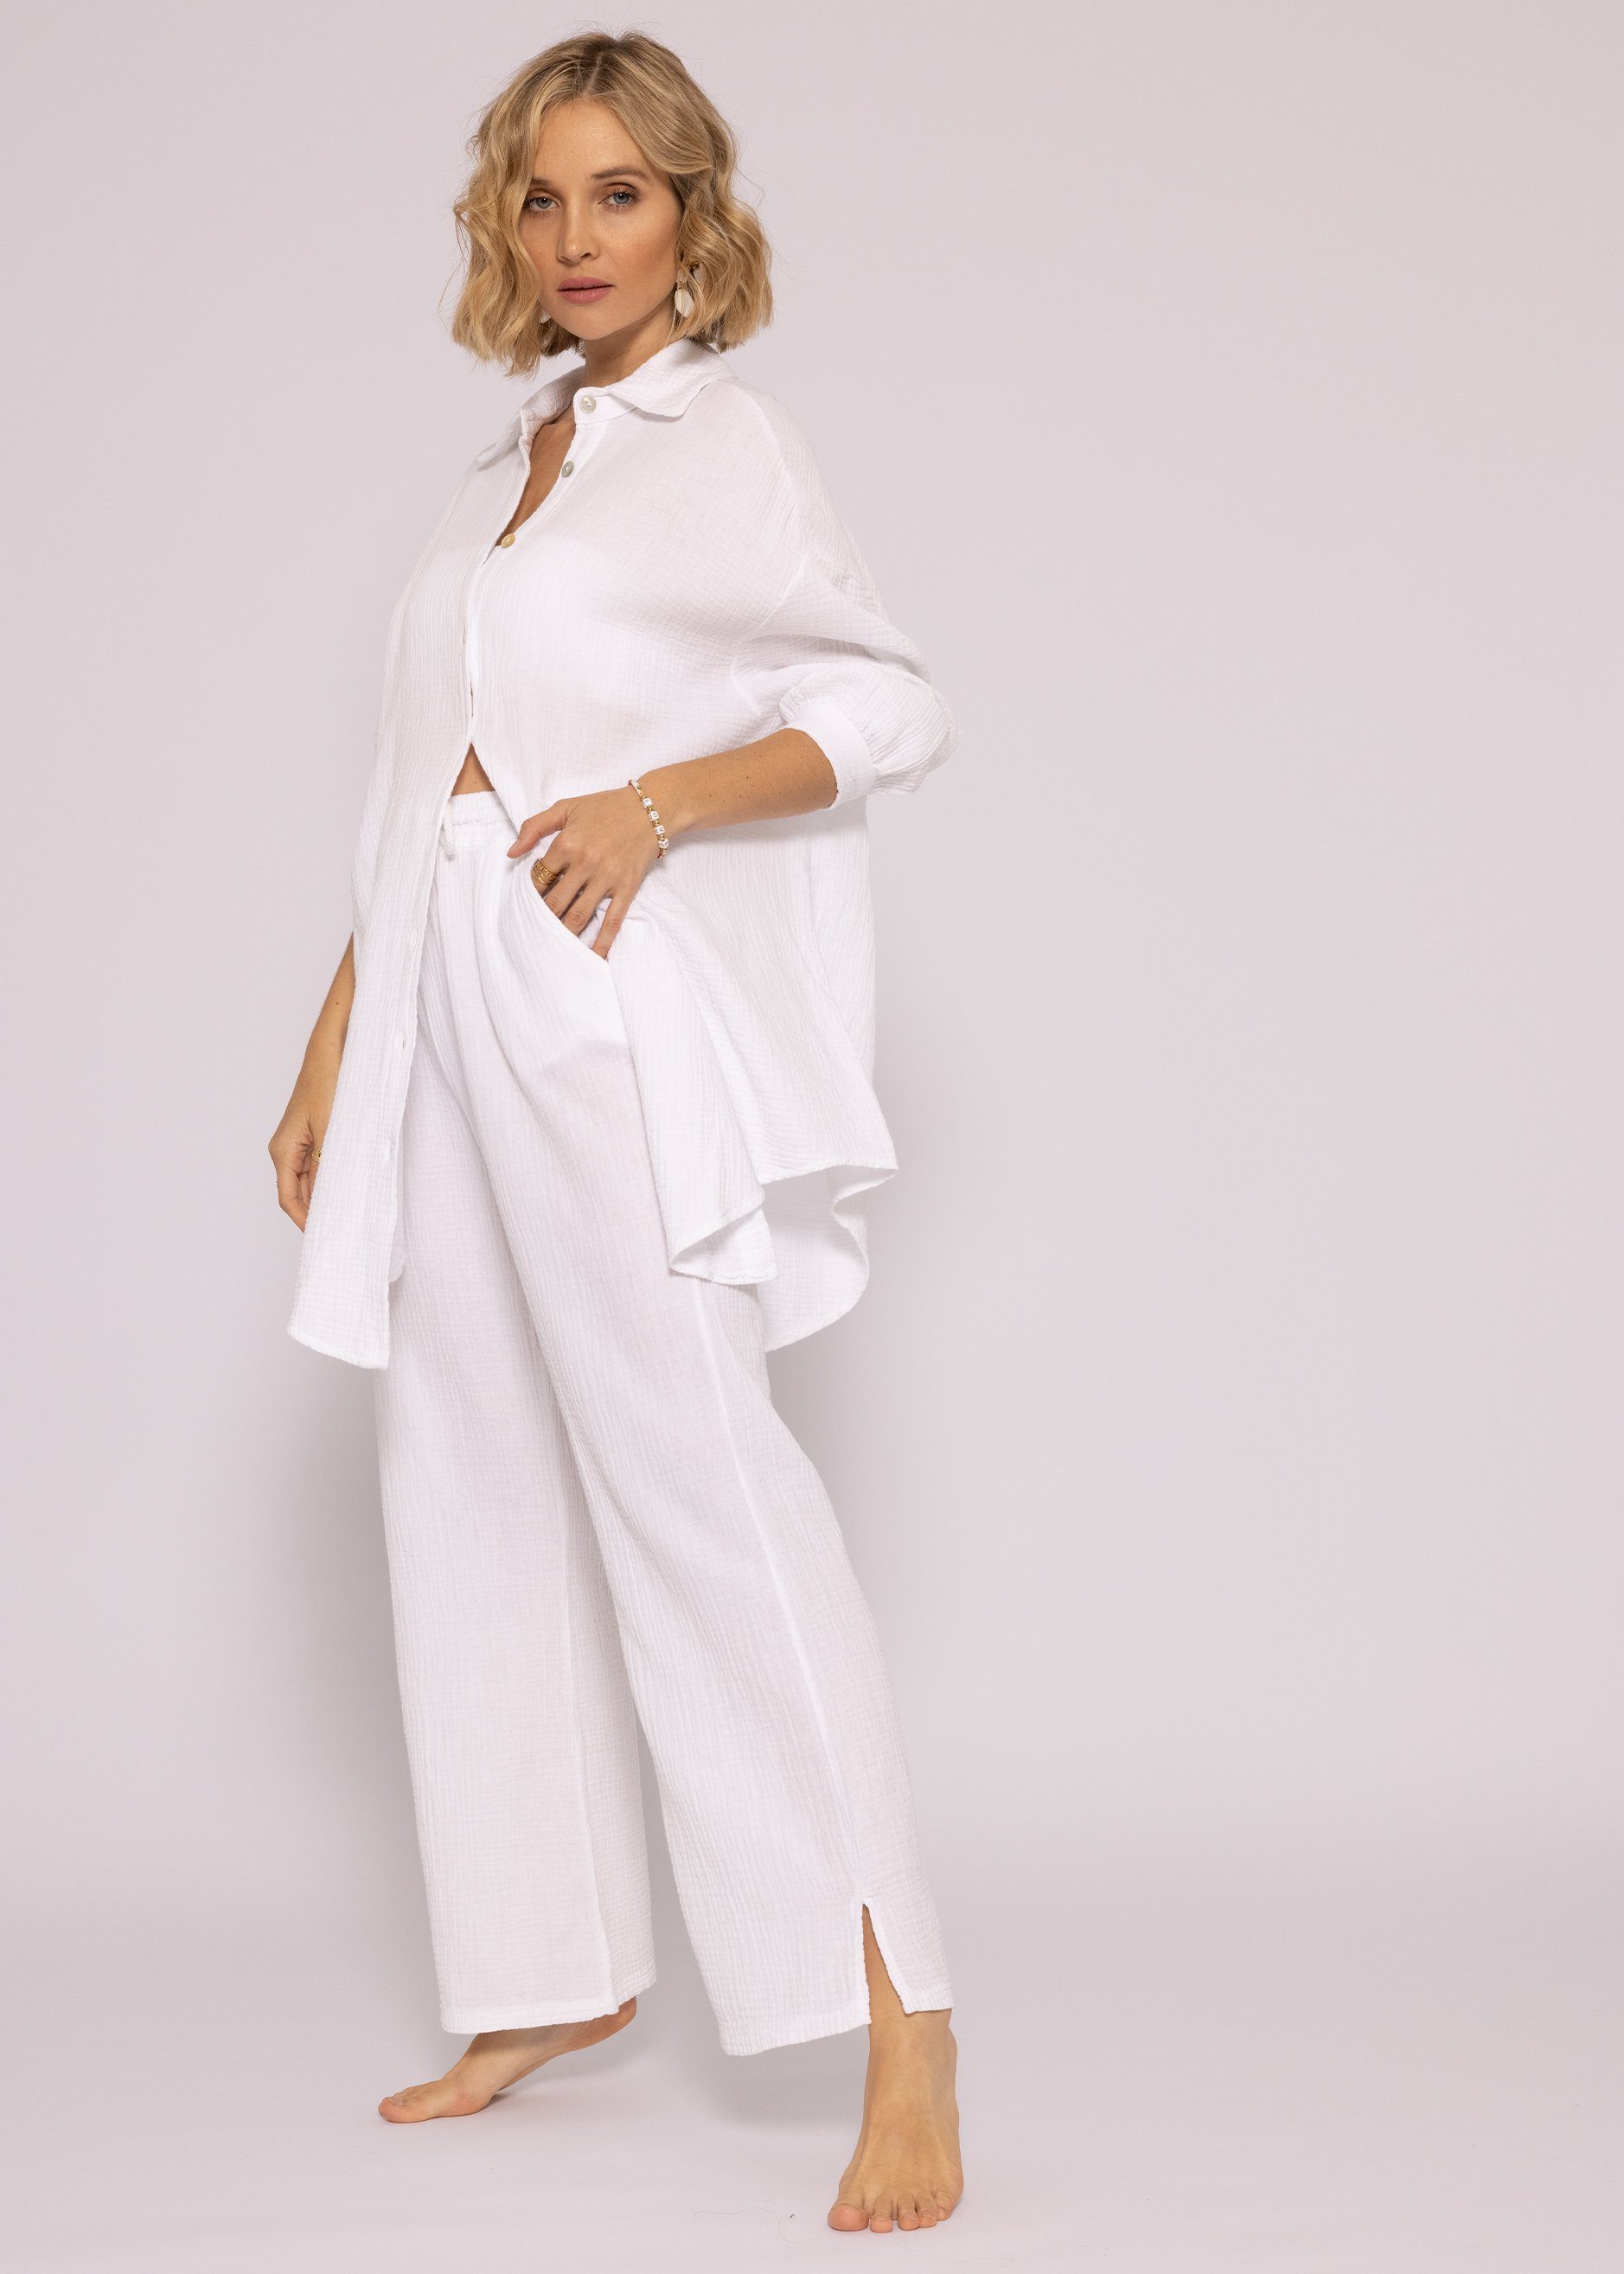 Hemdbluse Weiß mit Damen V-Ausschnitt Oversize Langarm aus Baumwolle Bluse lang SASSYCLASSY Longbluse Musselin